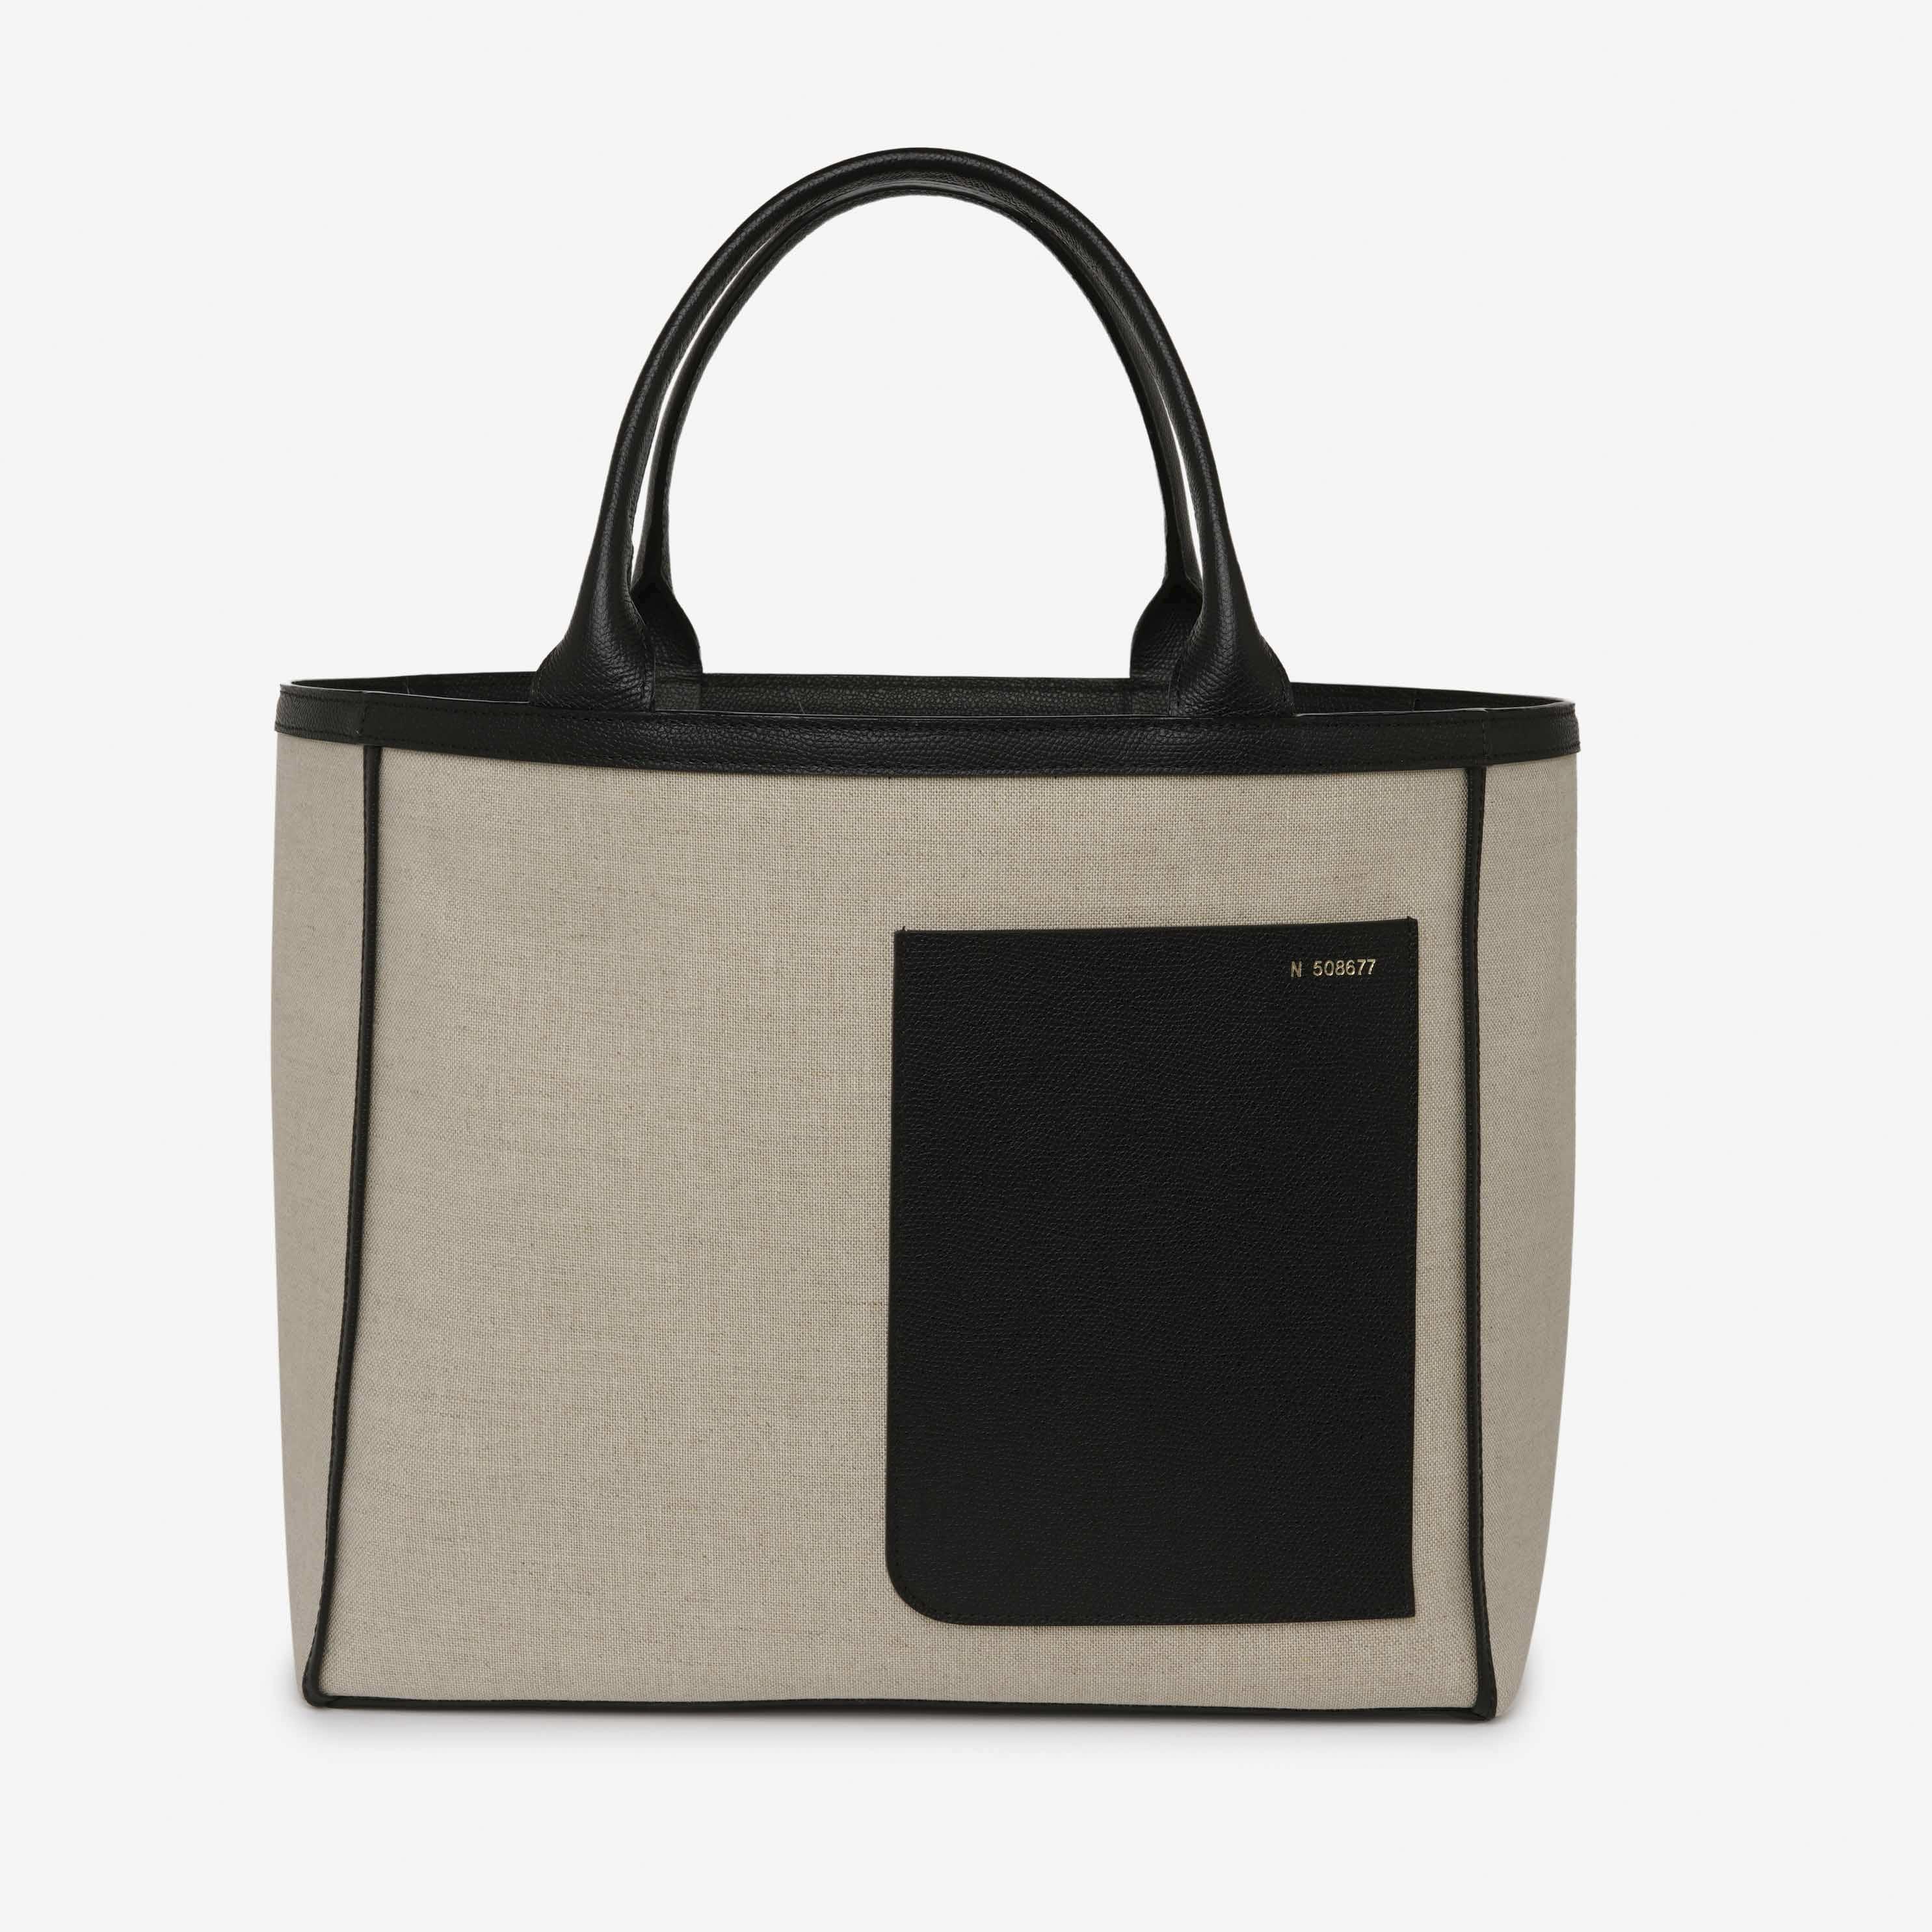 Shopping Medium Bag Canvas - Sand Brown/Black - Tessuto Canvas/VS - Valextra - 1